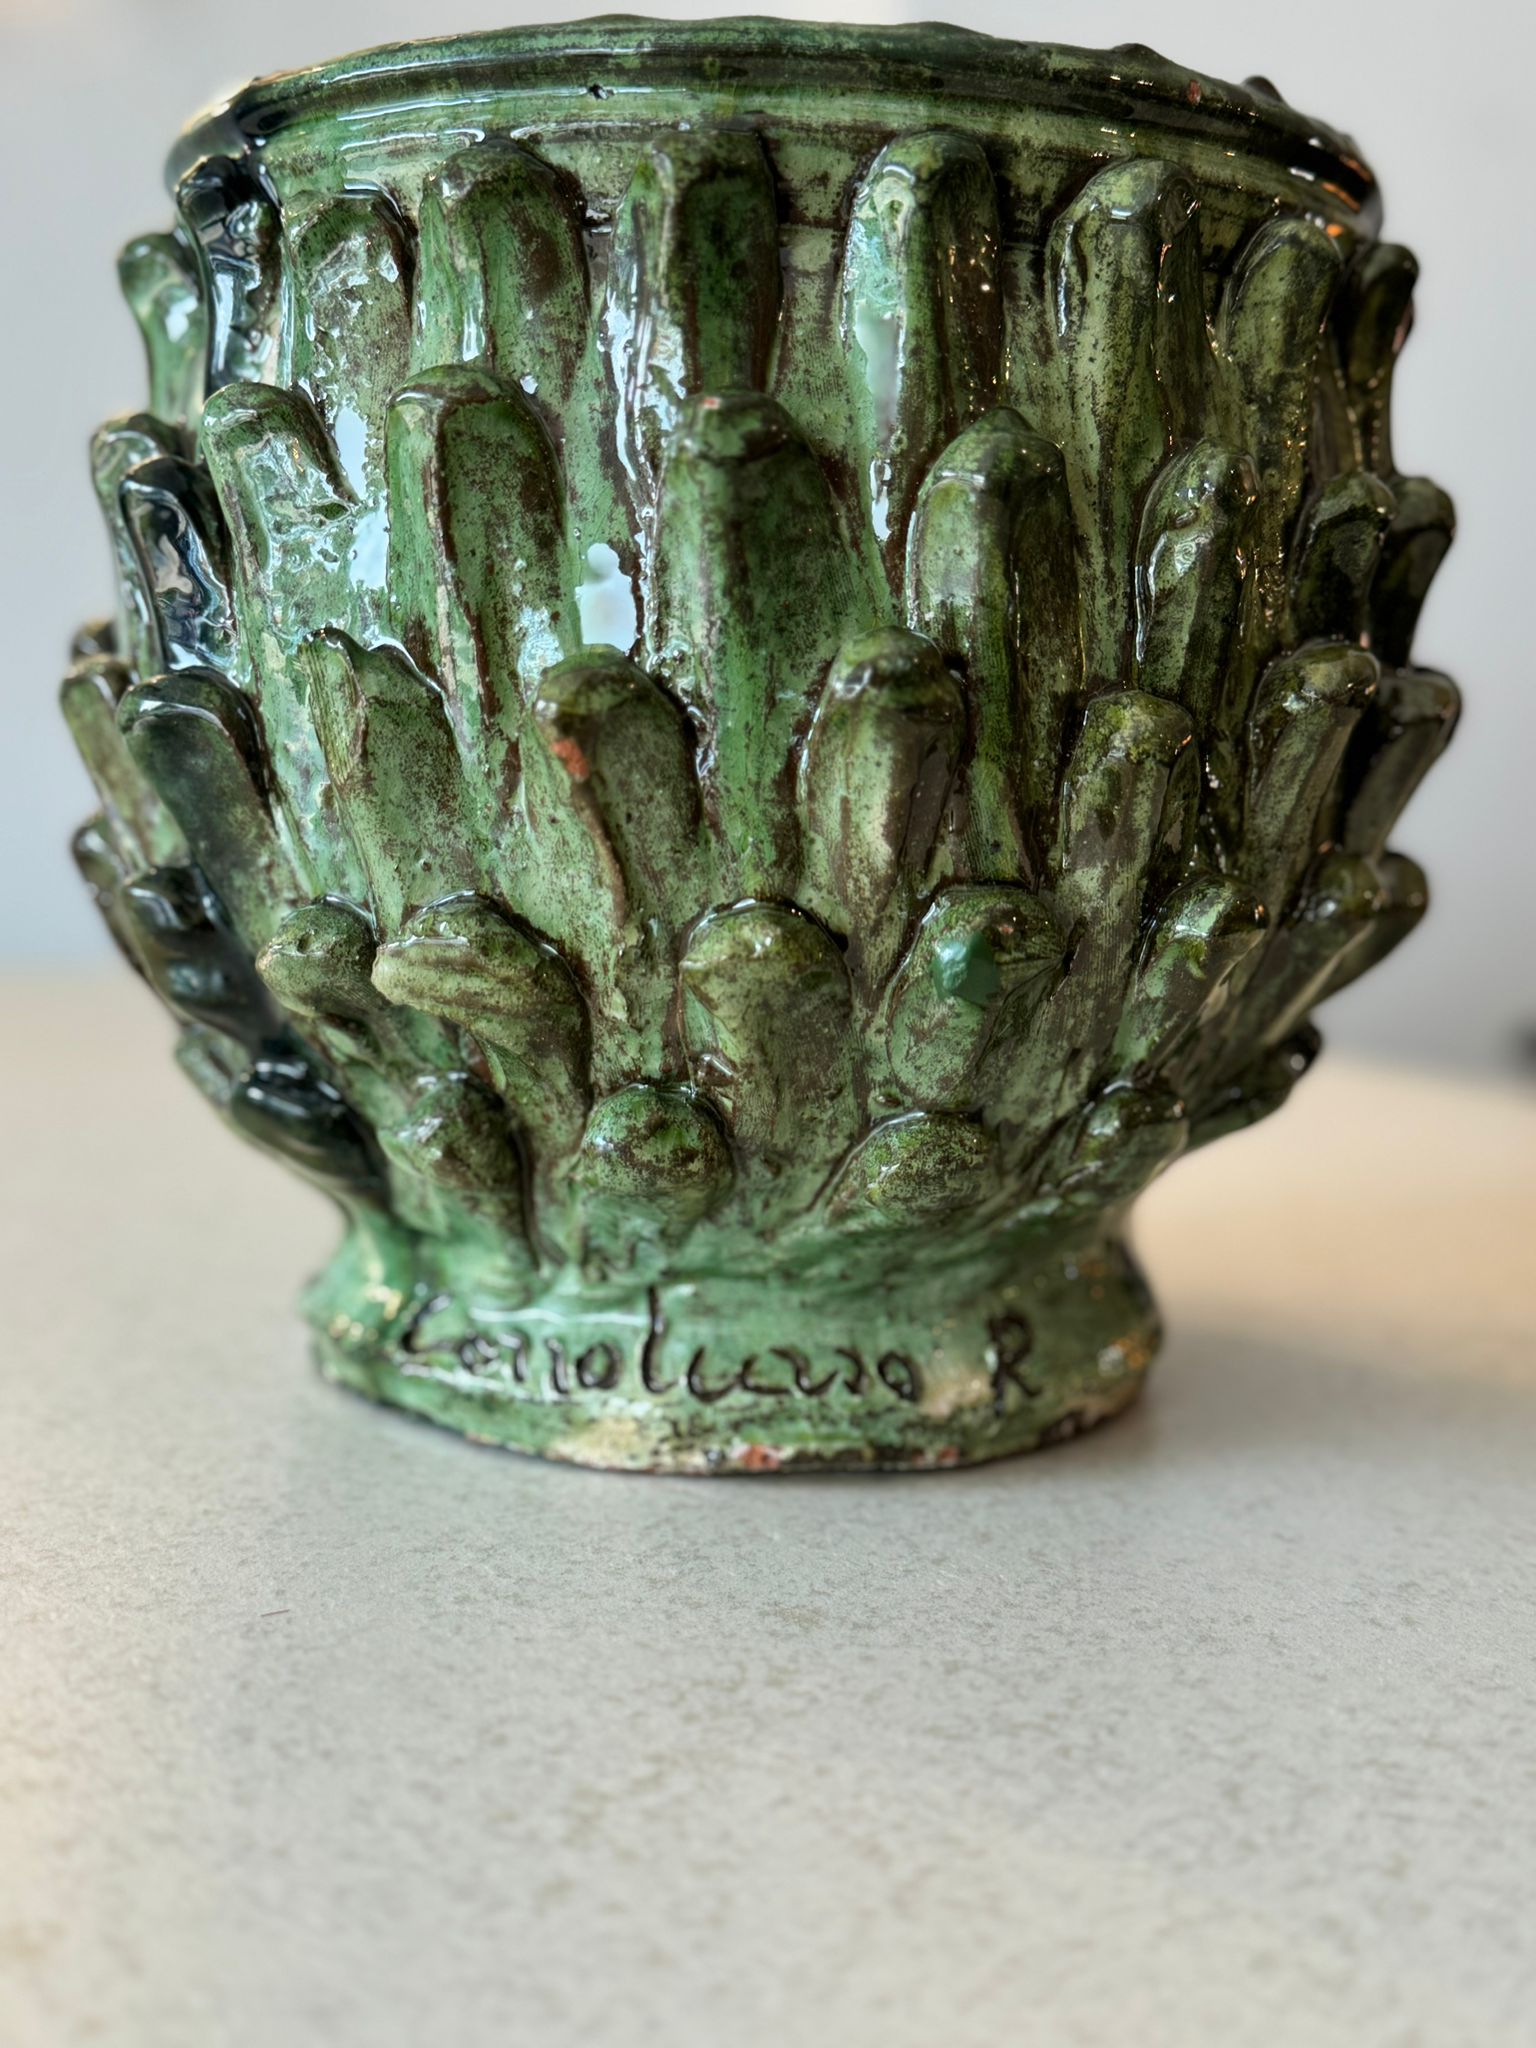 Ceramic Italian hand made green fern planter - Puglia circa 1950